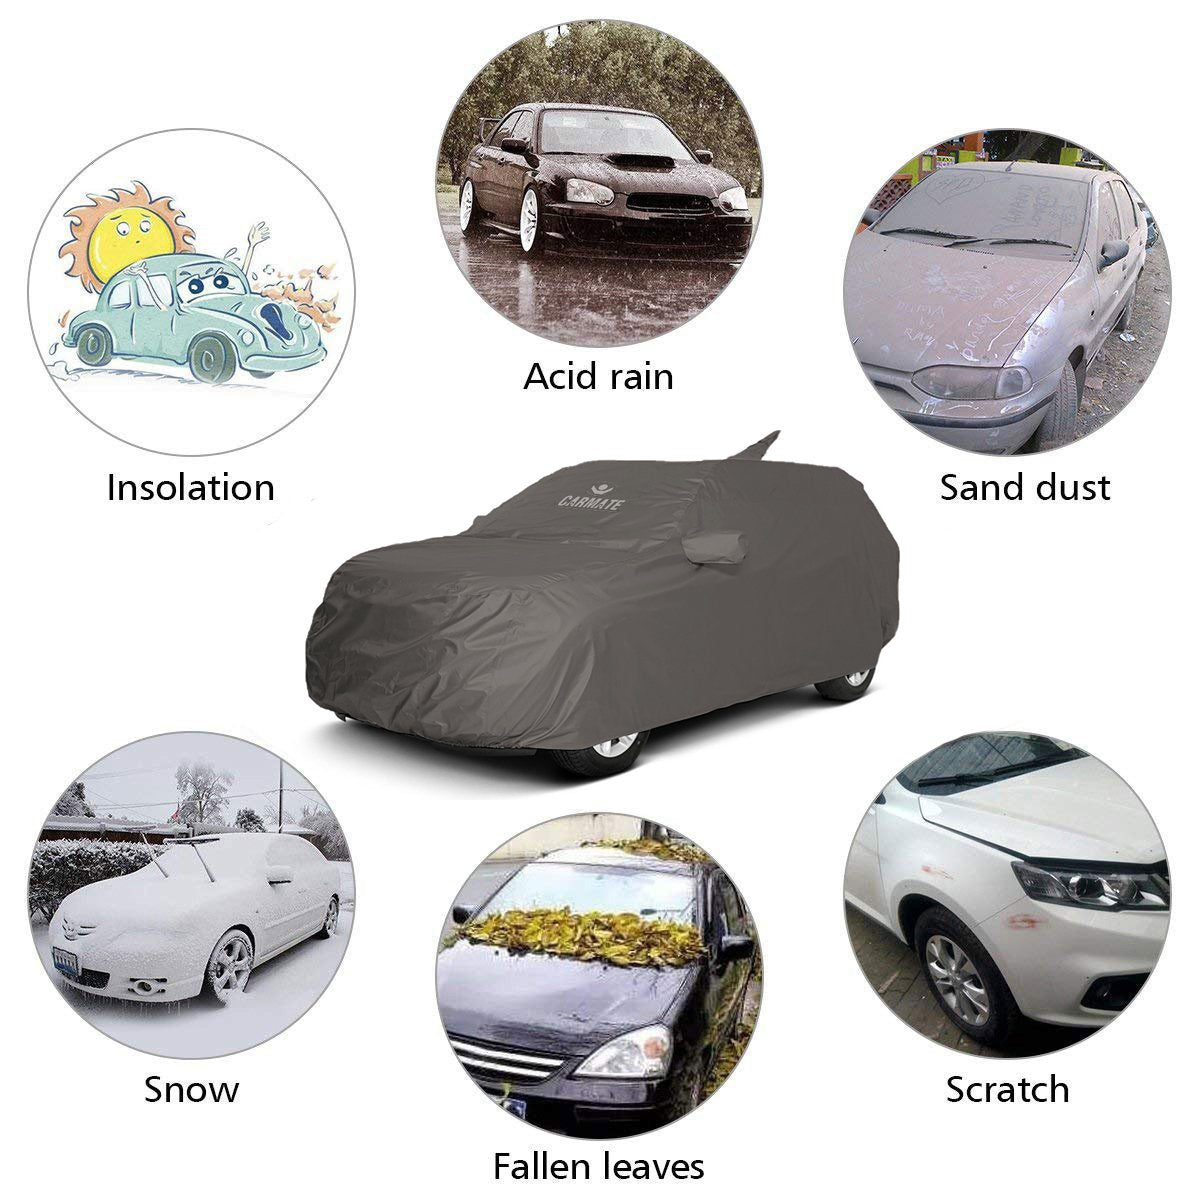 Carmate Car Body Cover 100% Waterproof Pride (Grey) for Tata - Manza - CARMATE®